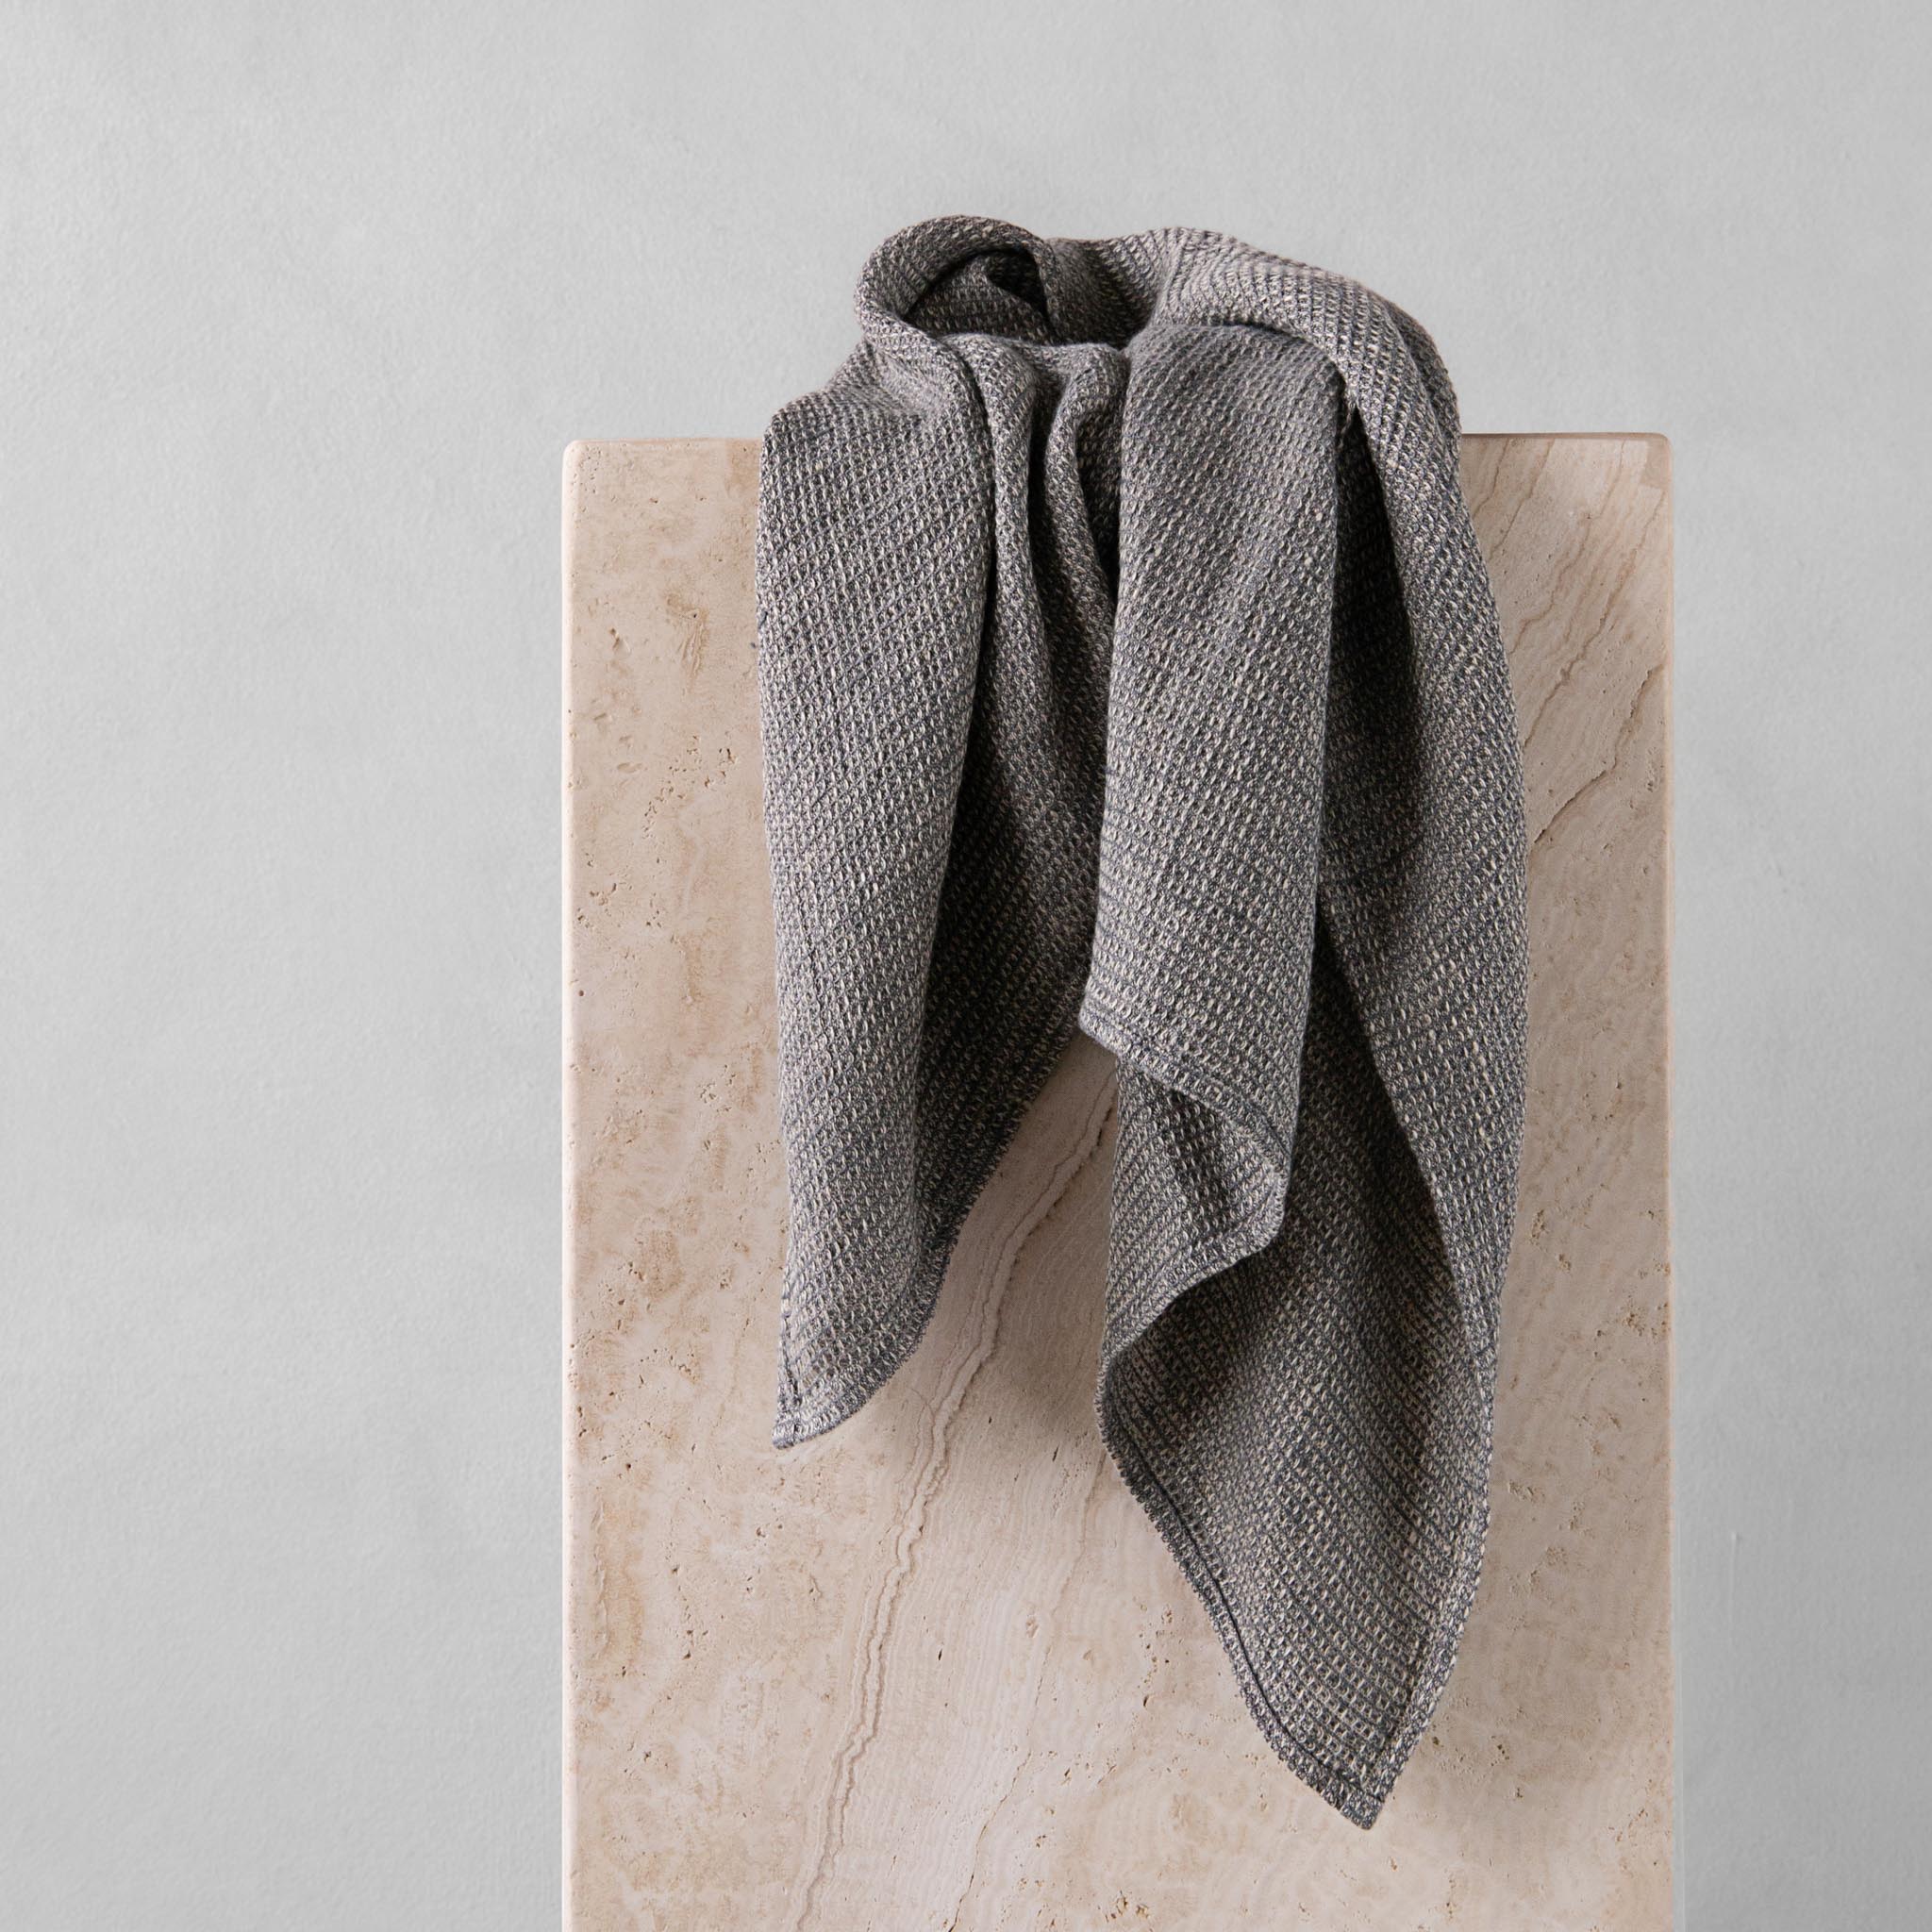 Linen Tea Towels | Charcoal Grey | Hale Mercantile Co.